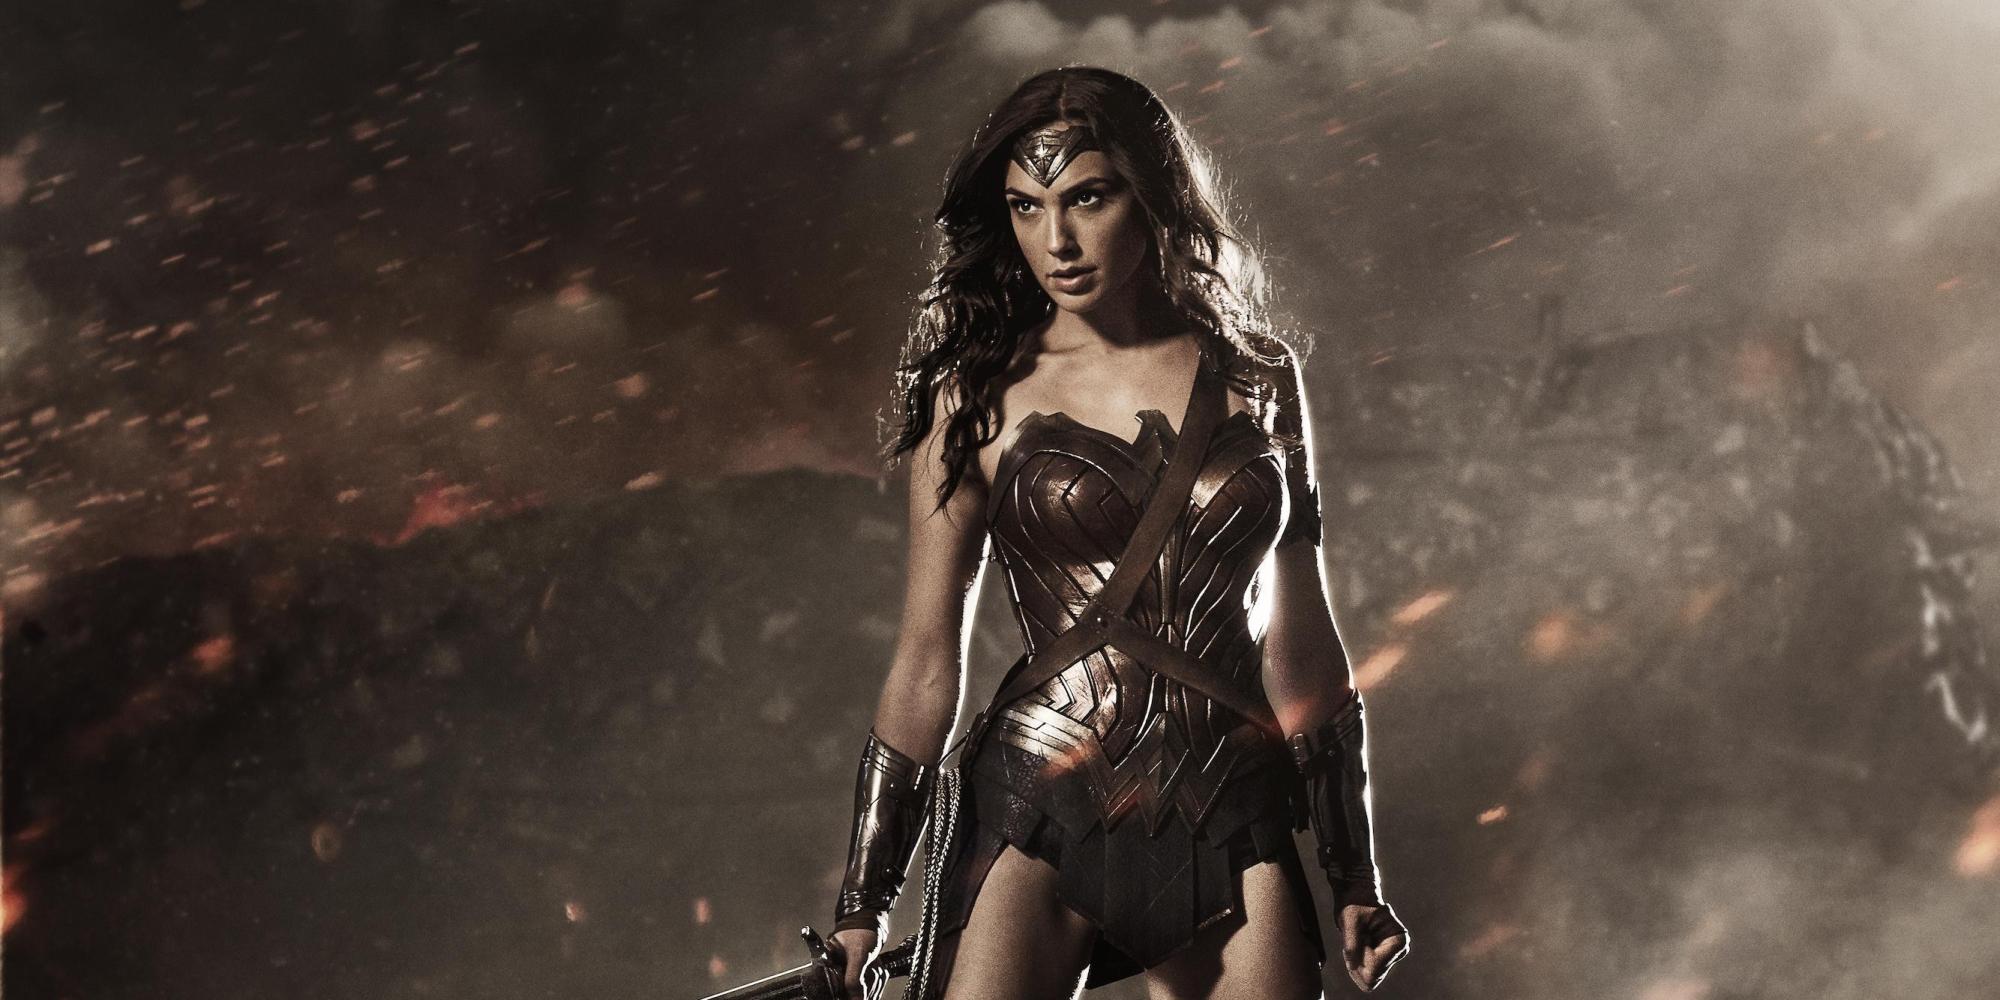 What Does Michelle MacLaren's Departure Mean for Wonder Woman?